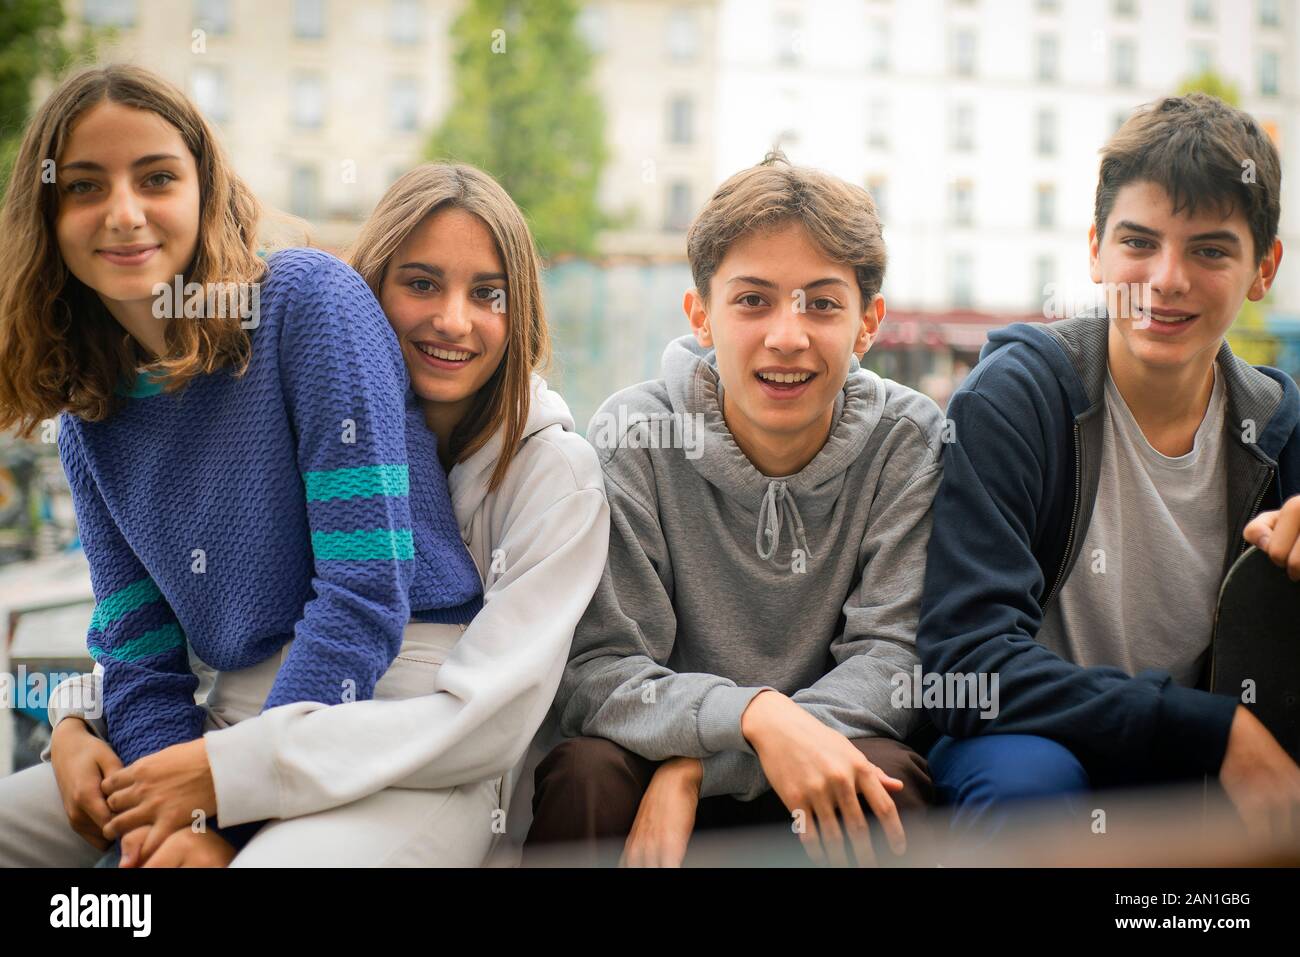 Teenage friends sitting outdoors Stock Photo